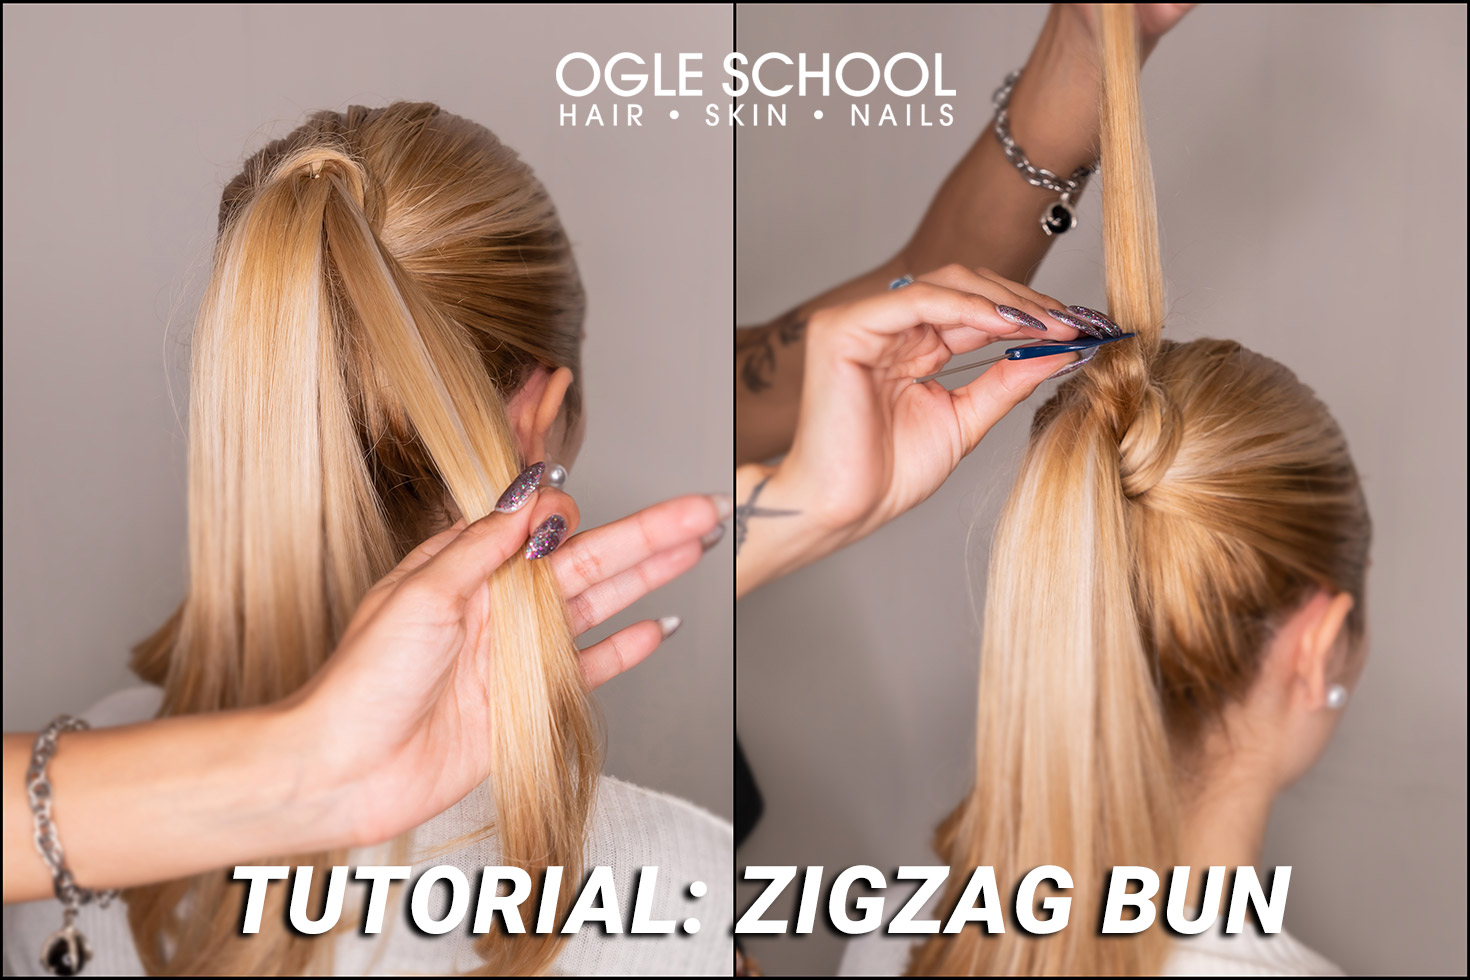 Zigzag Bun Hairstyle Tutorial - Cosmetology School & Beauty School in Texas  - Ogle School